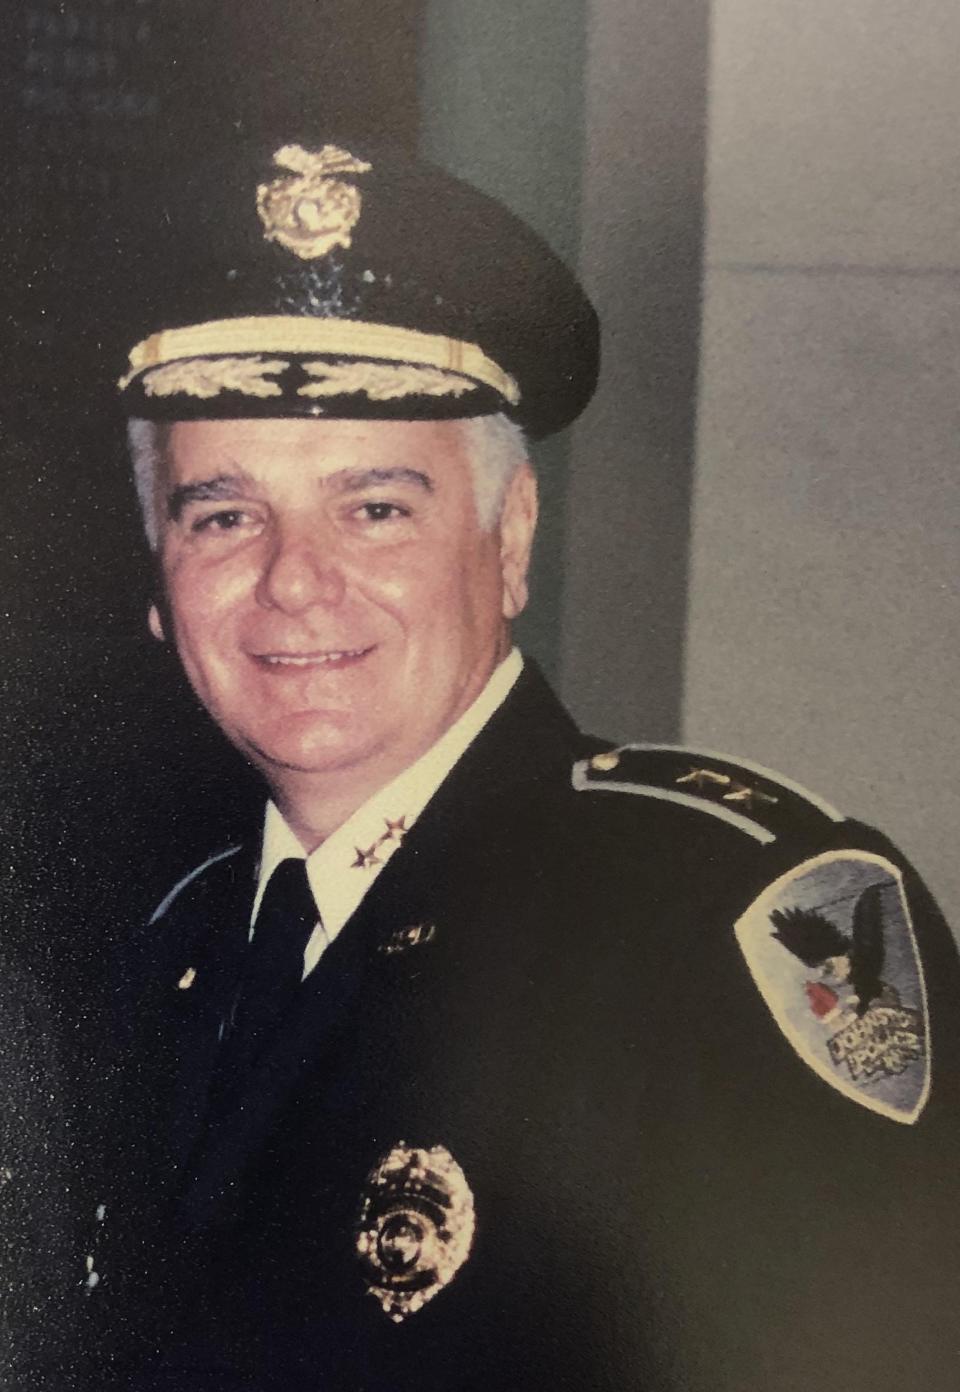 Former Johnston Police Chief Richard S. Tamburini retired in 2020.